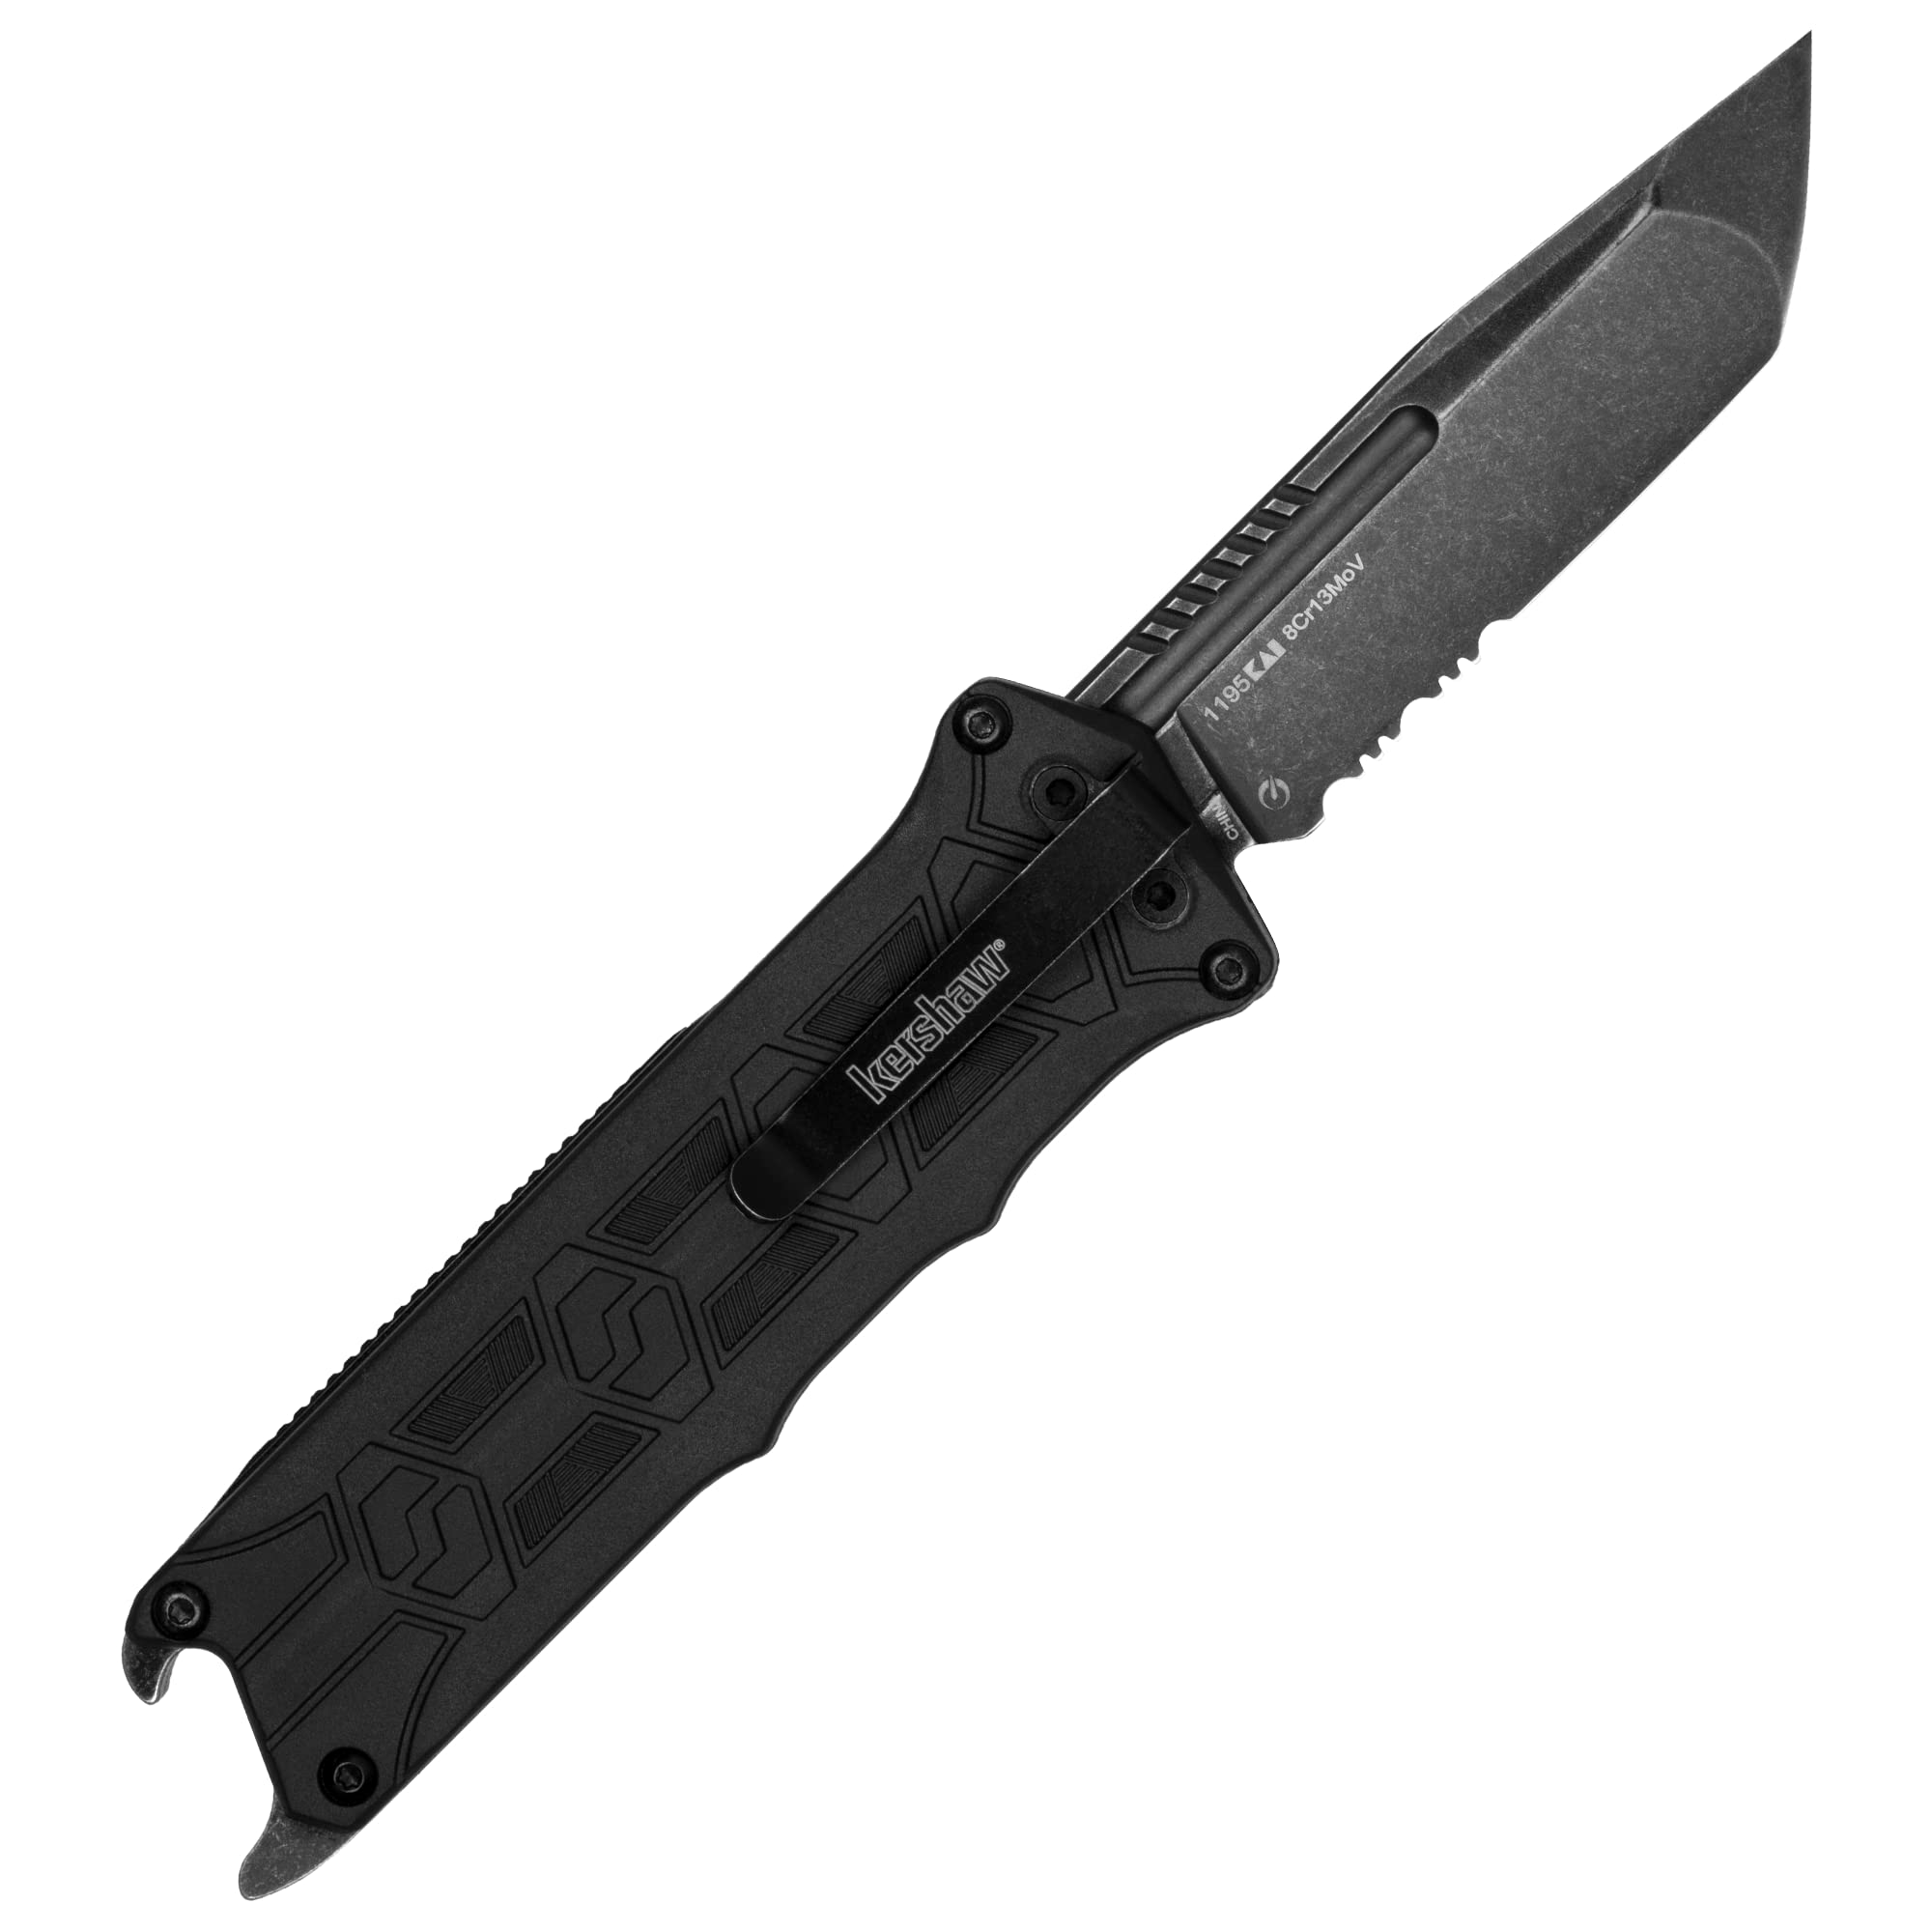 Kershaw Interstellar Pocket Knife, Black Manual OTF Tanto Blade with Serrations, Blackwash Finish with GFN Handle, Bottle Opener & Deep Pocketclip